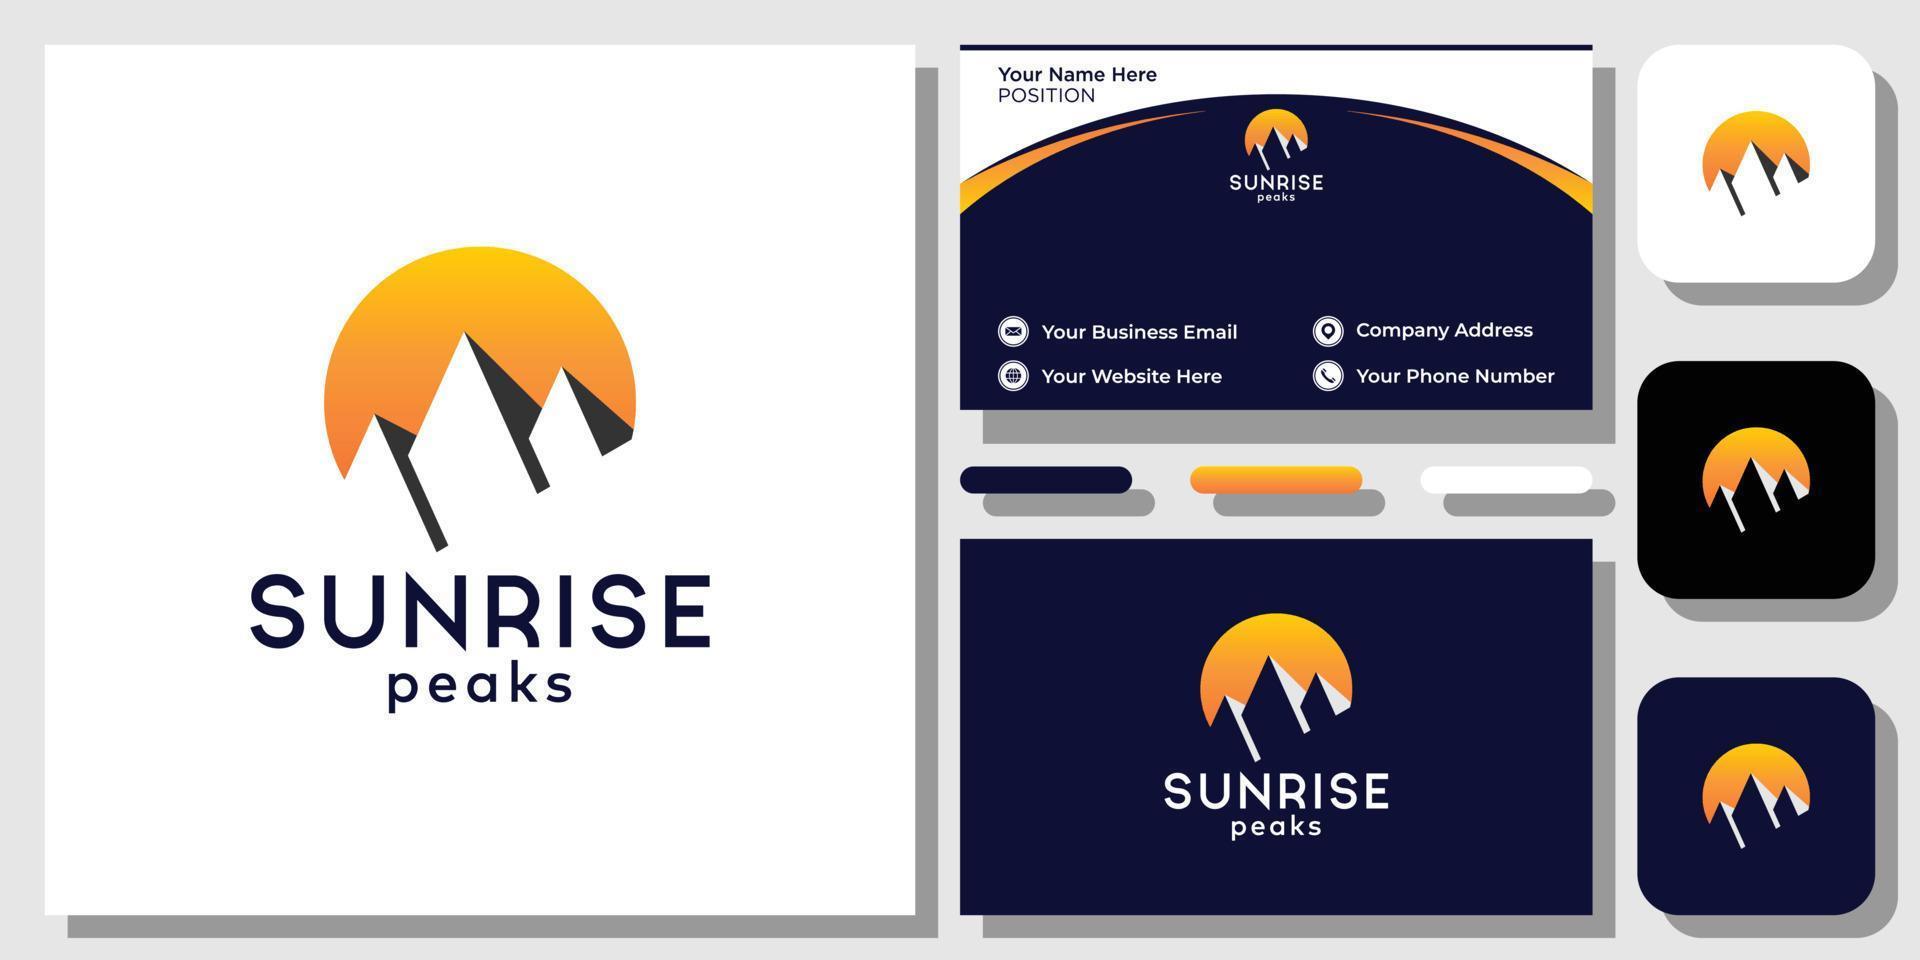 Sunrise Peak dawn light beautiful natural with business card template vector